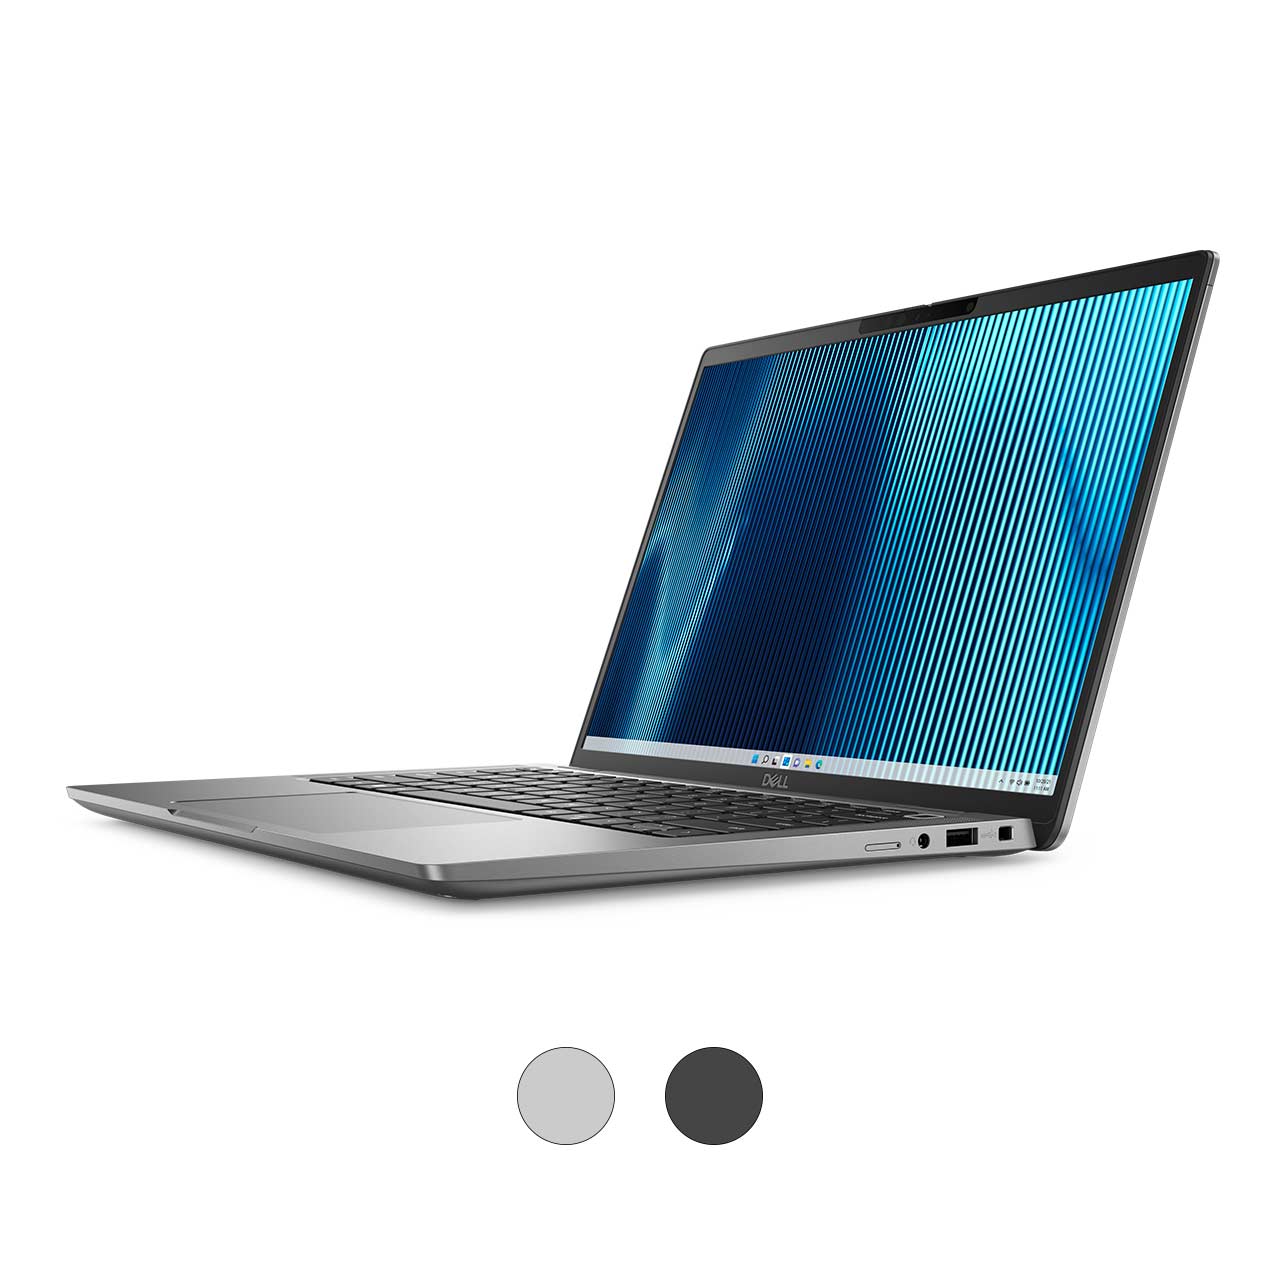 Latitude 13” 7000 (7340) Laptop or 2-in-1